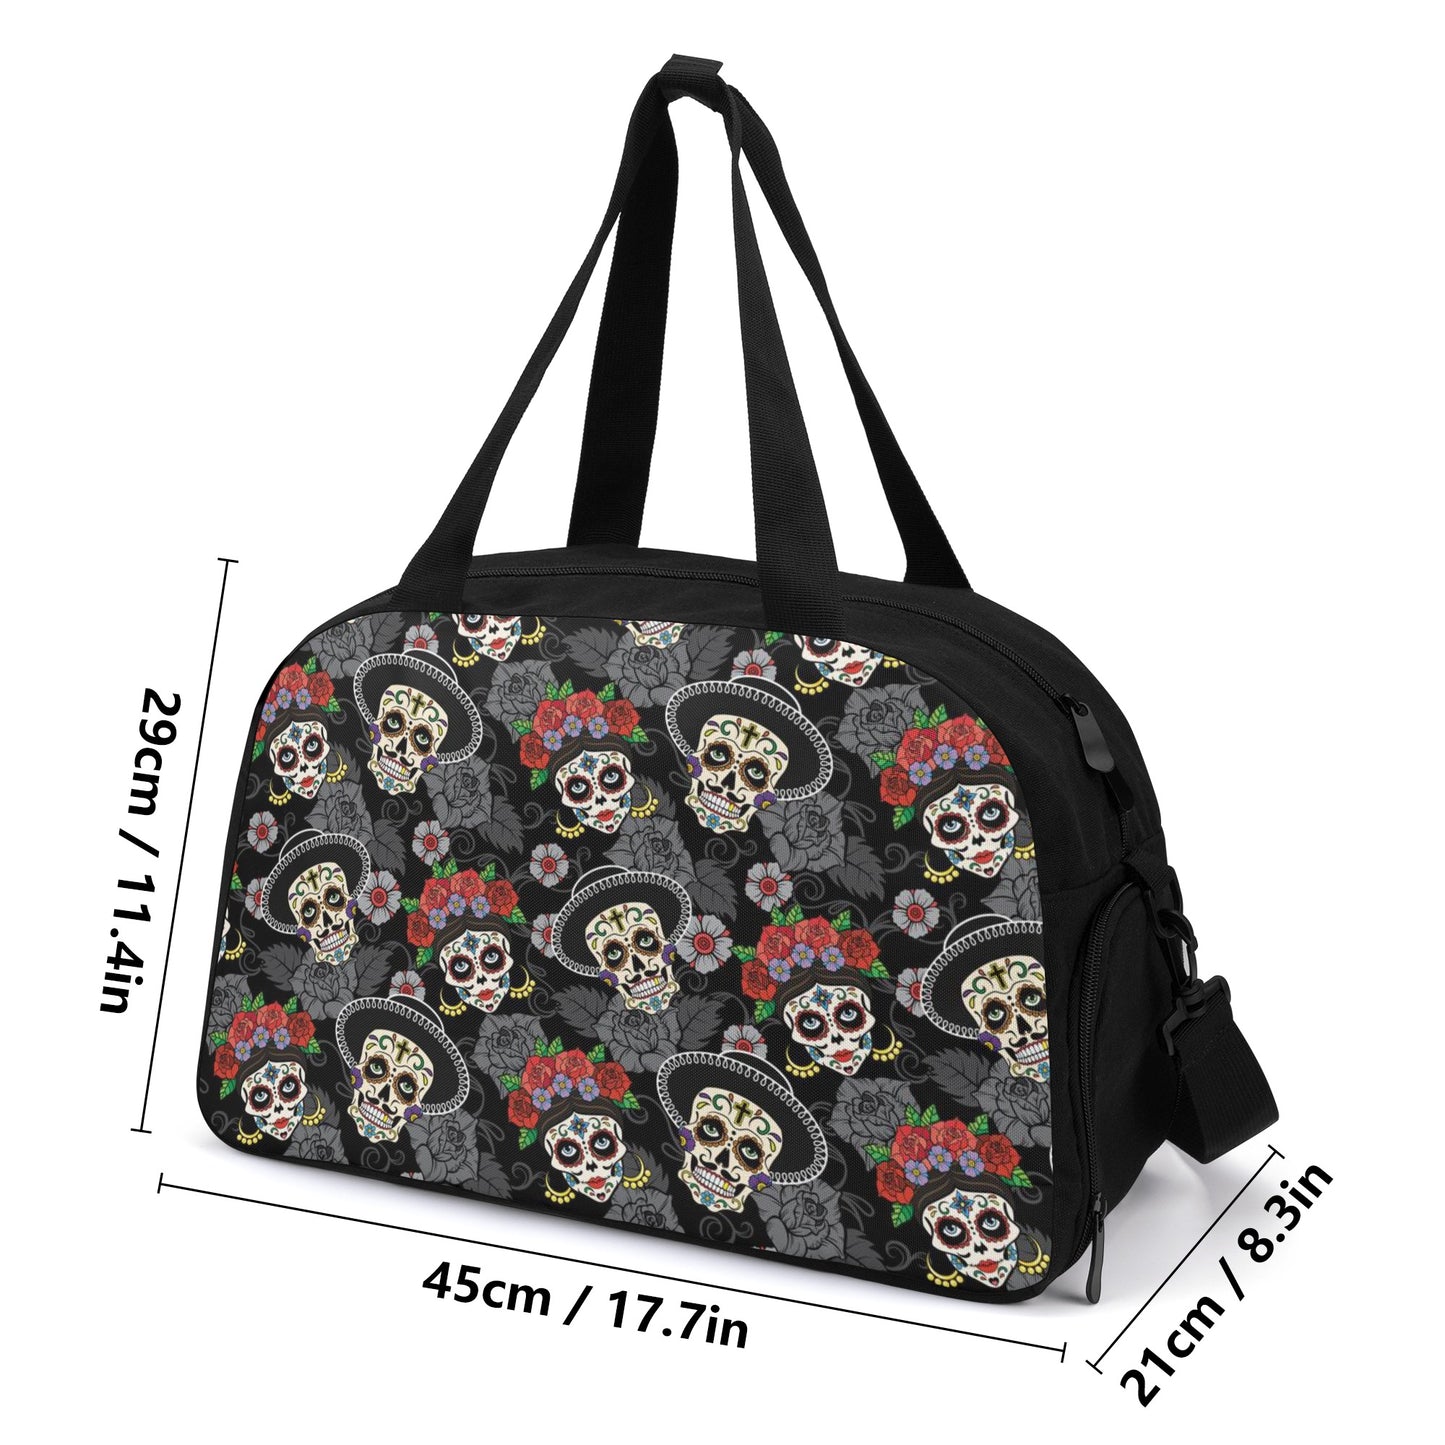 Candy skull Travel Luggage Bag